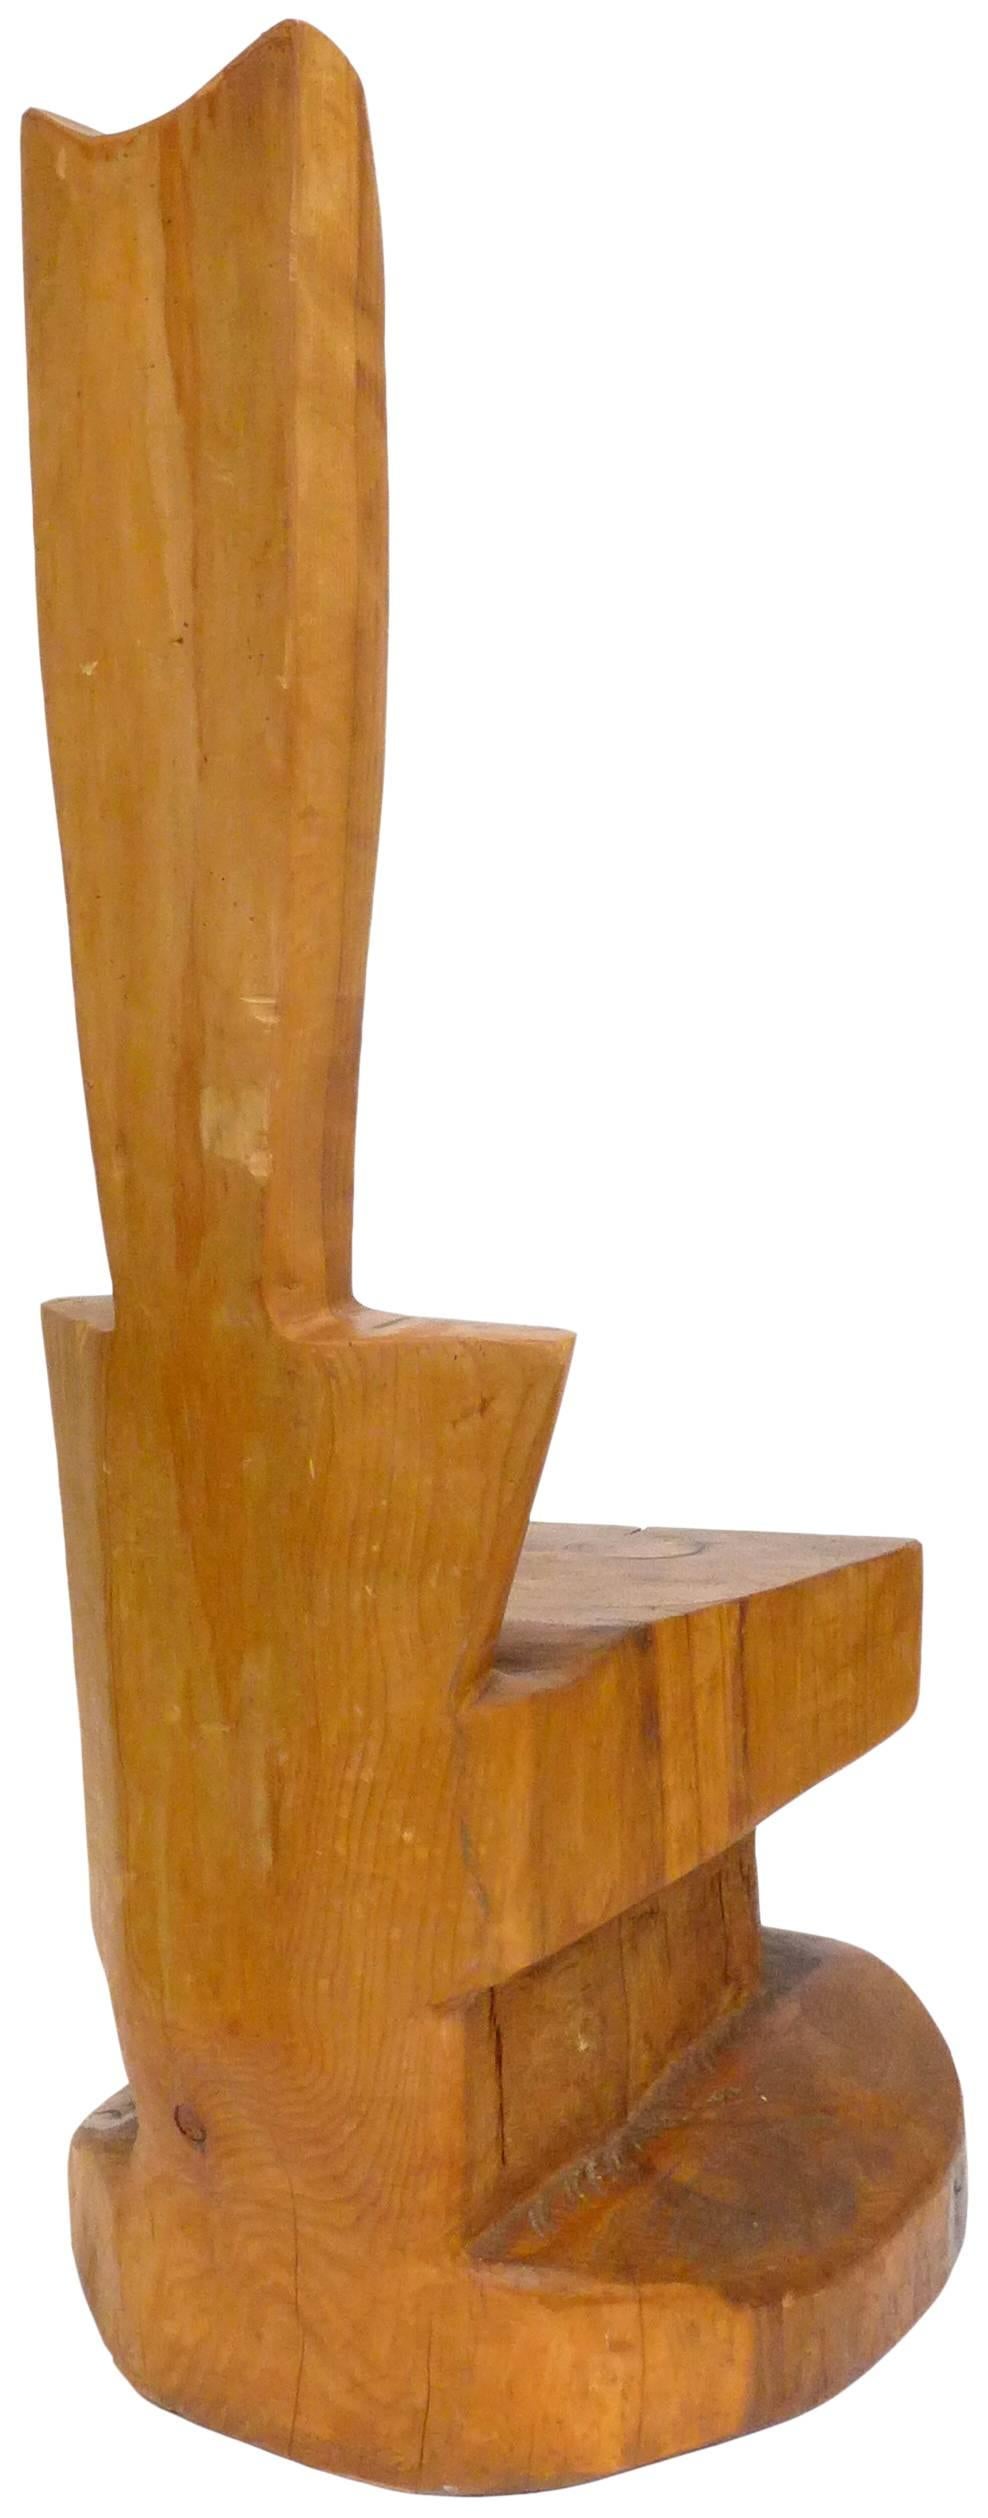 Hand-Carved Rough-Sawn Eucalyptus High-Back Throne